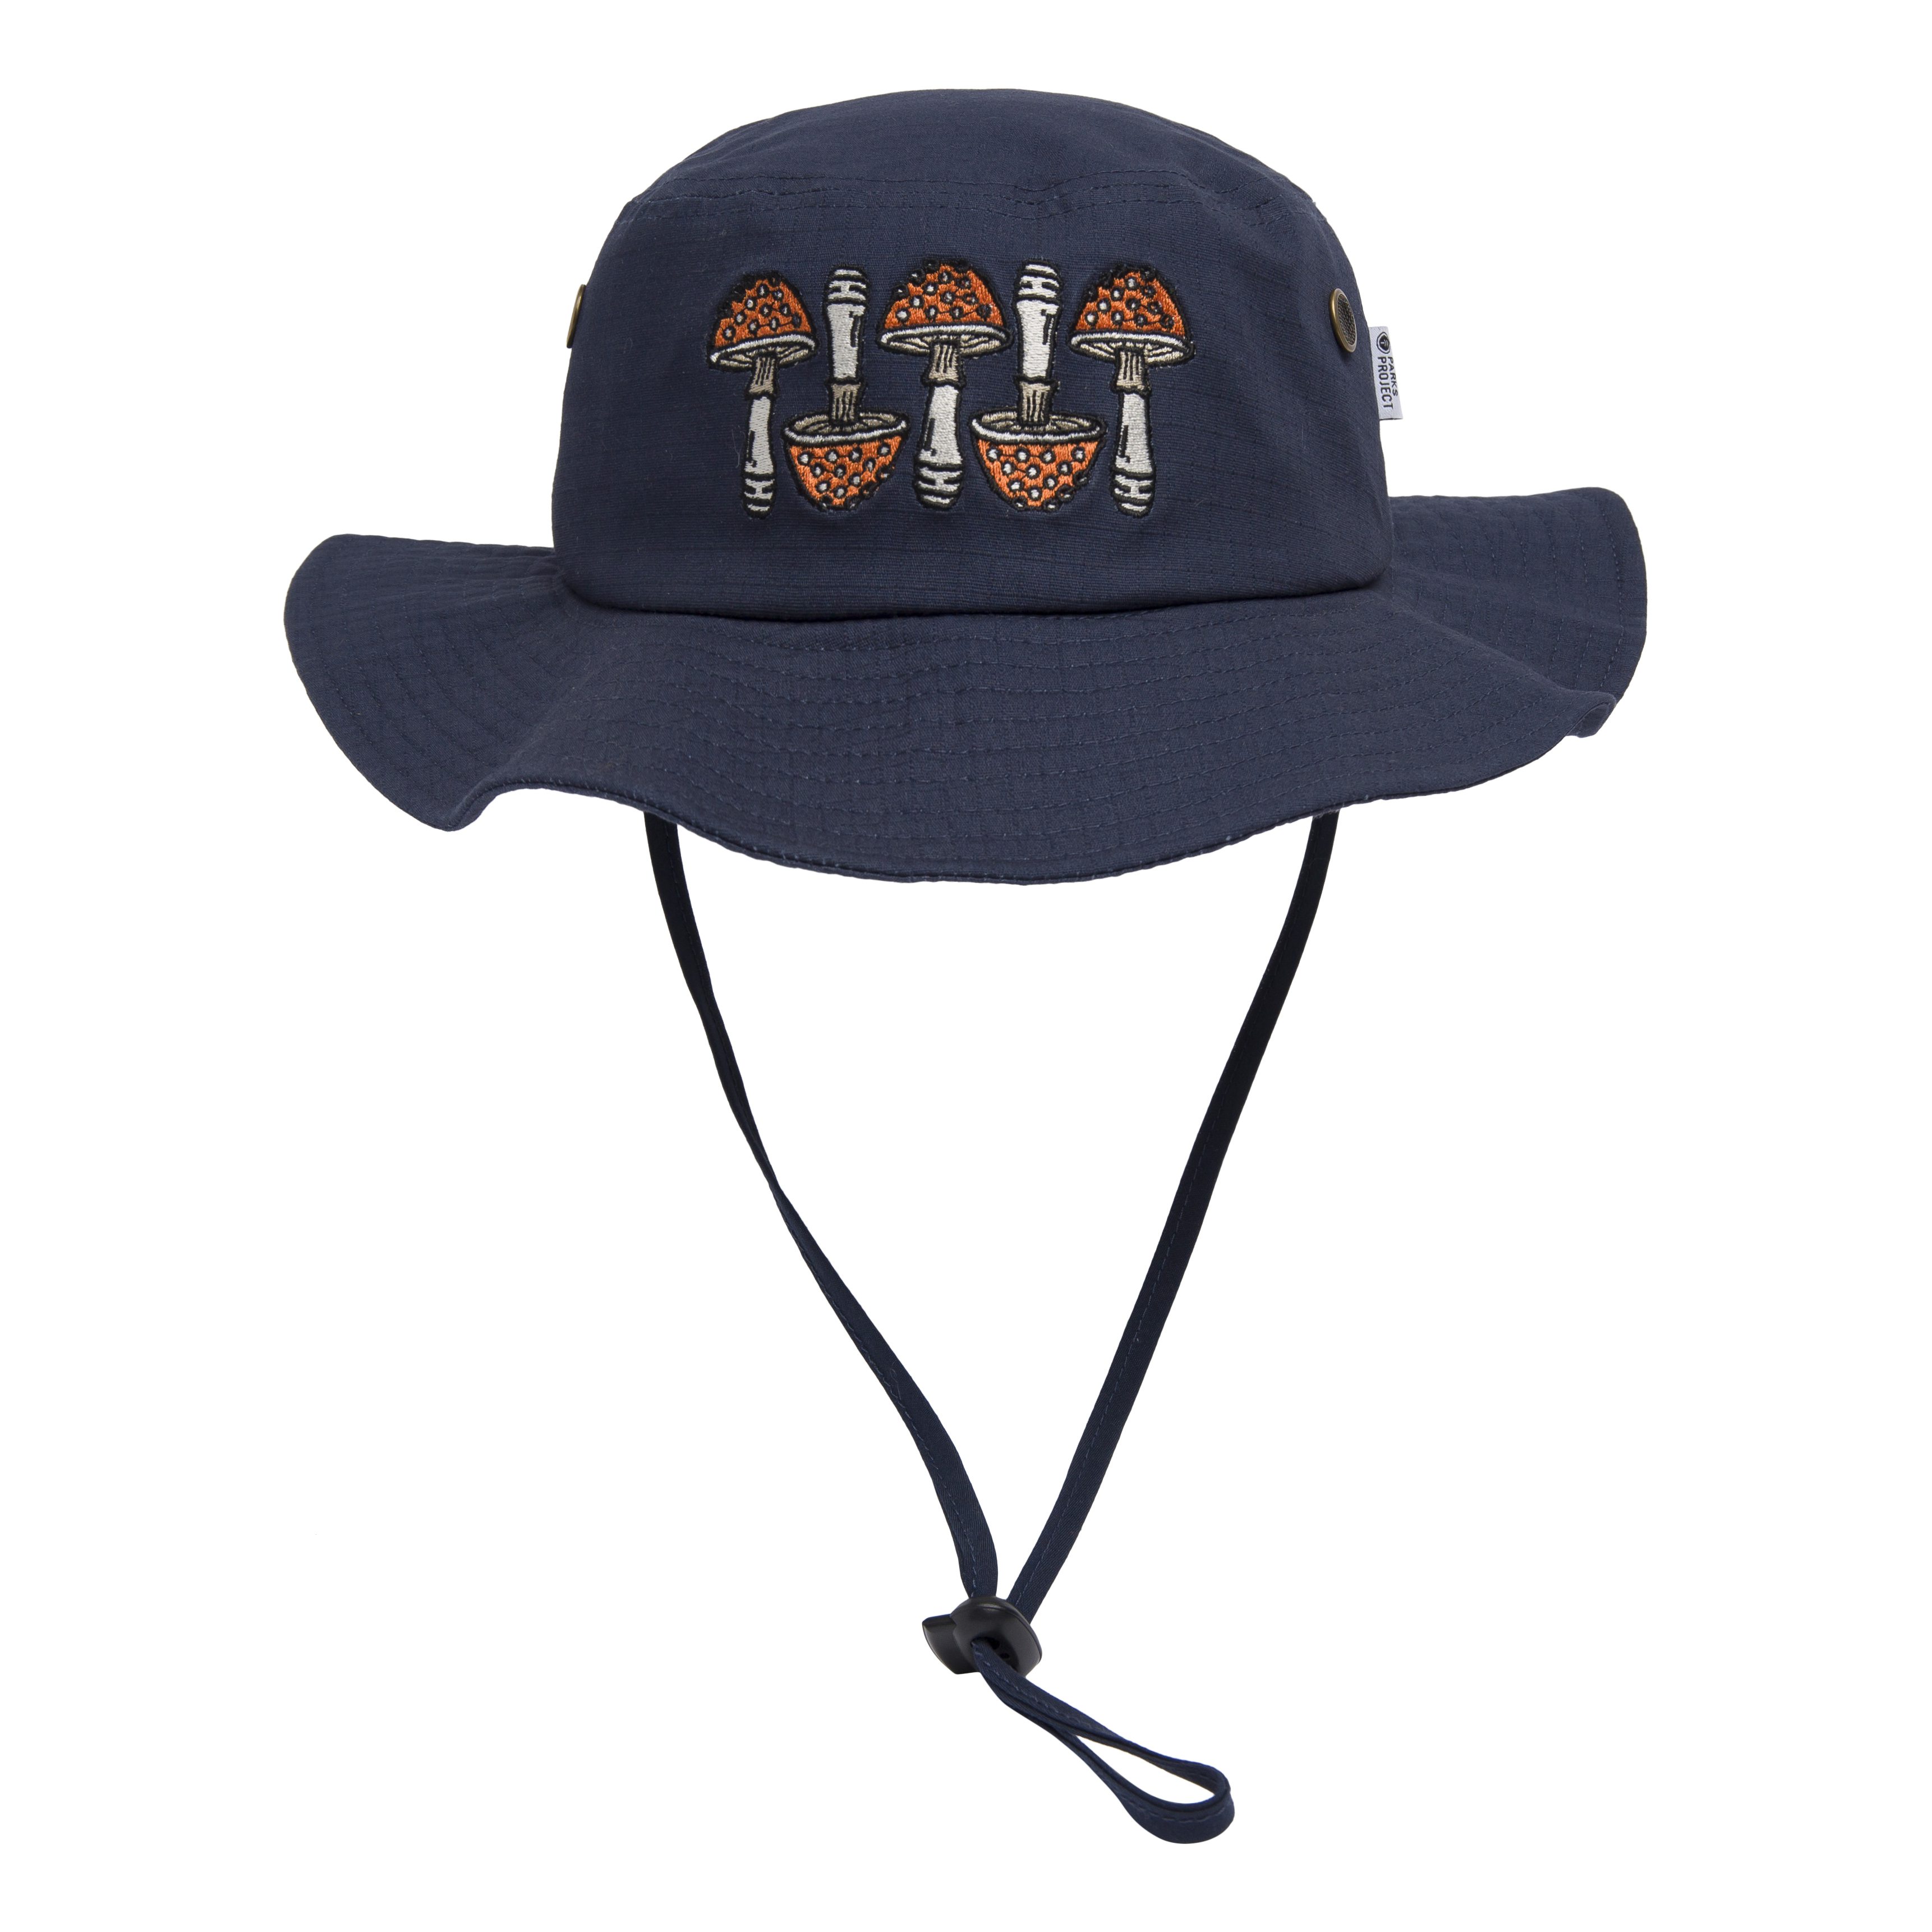 Shroom Caps River Hat